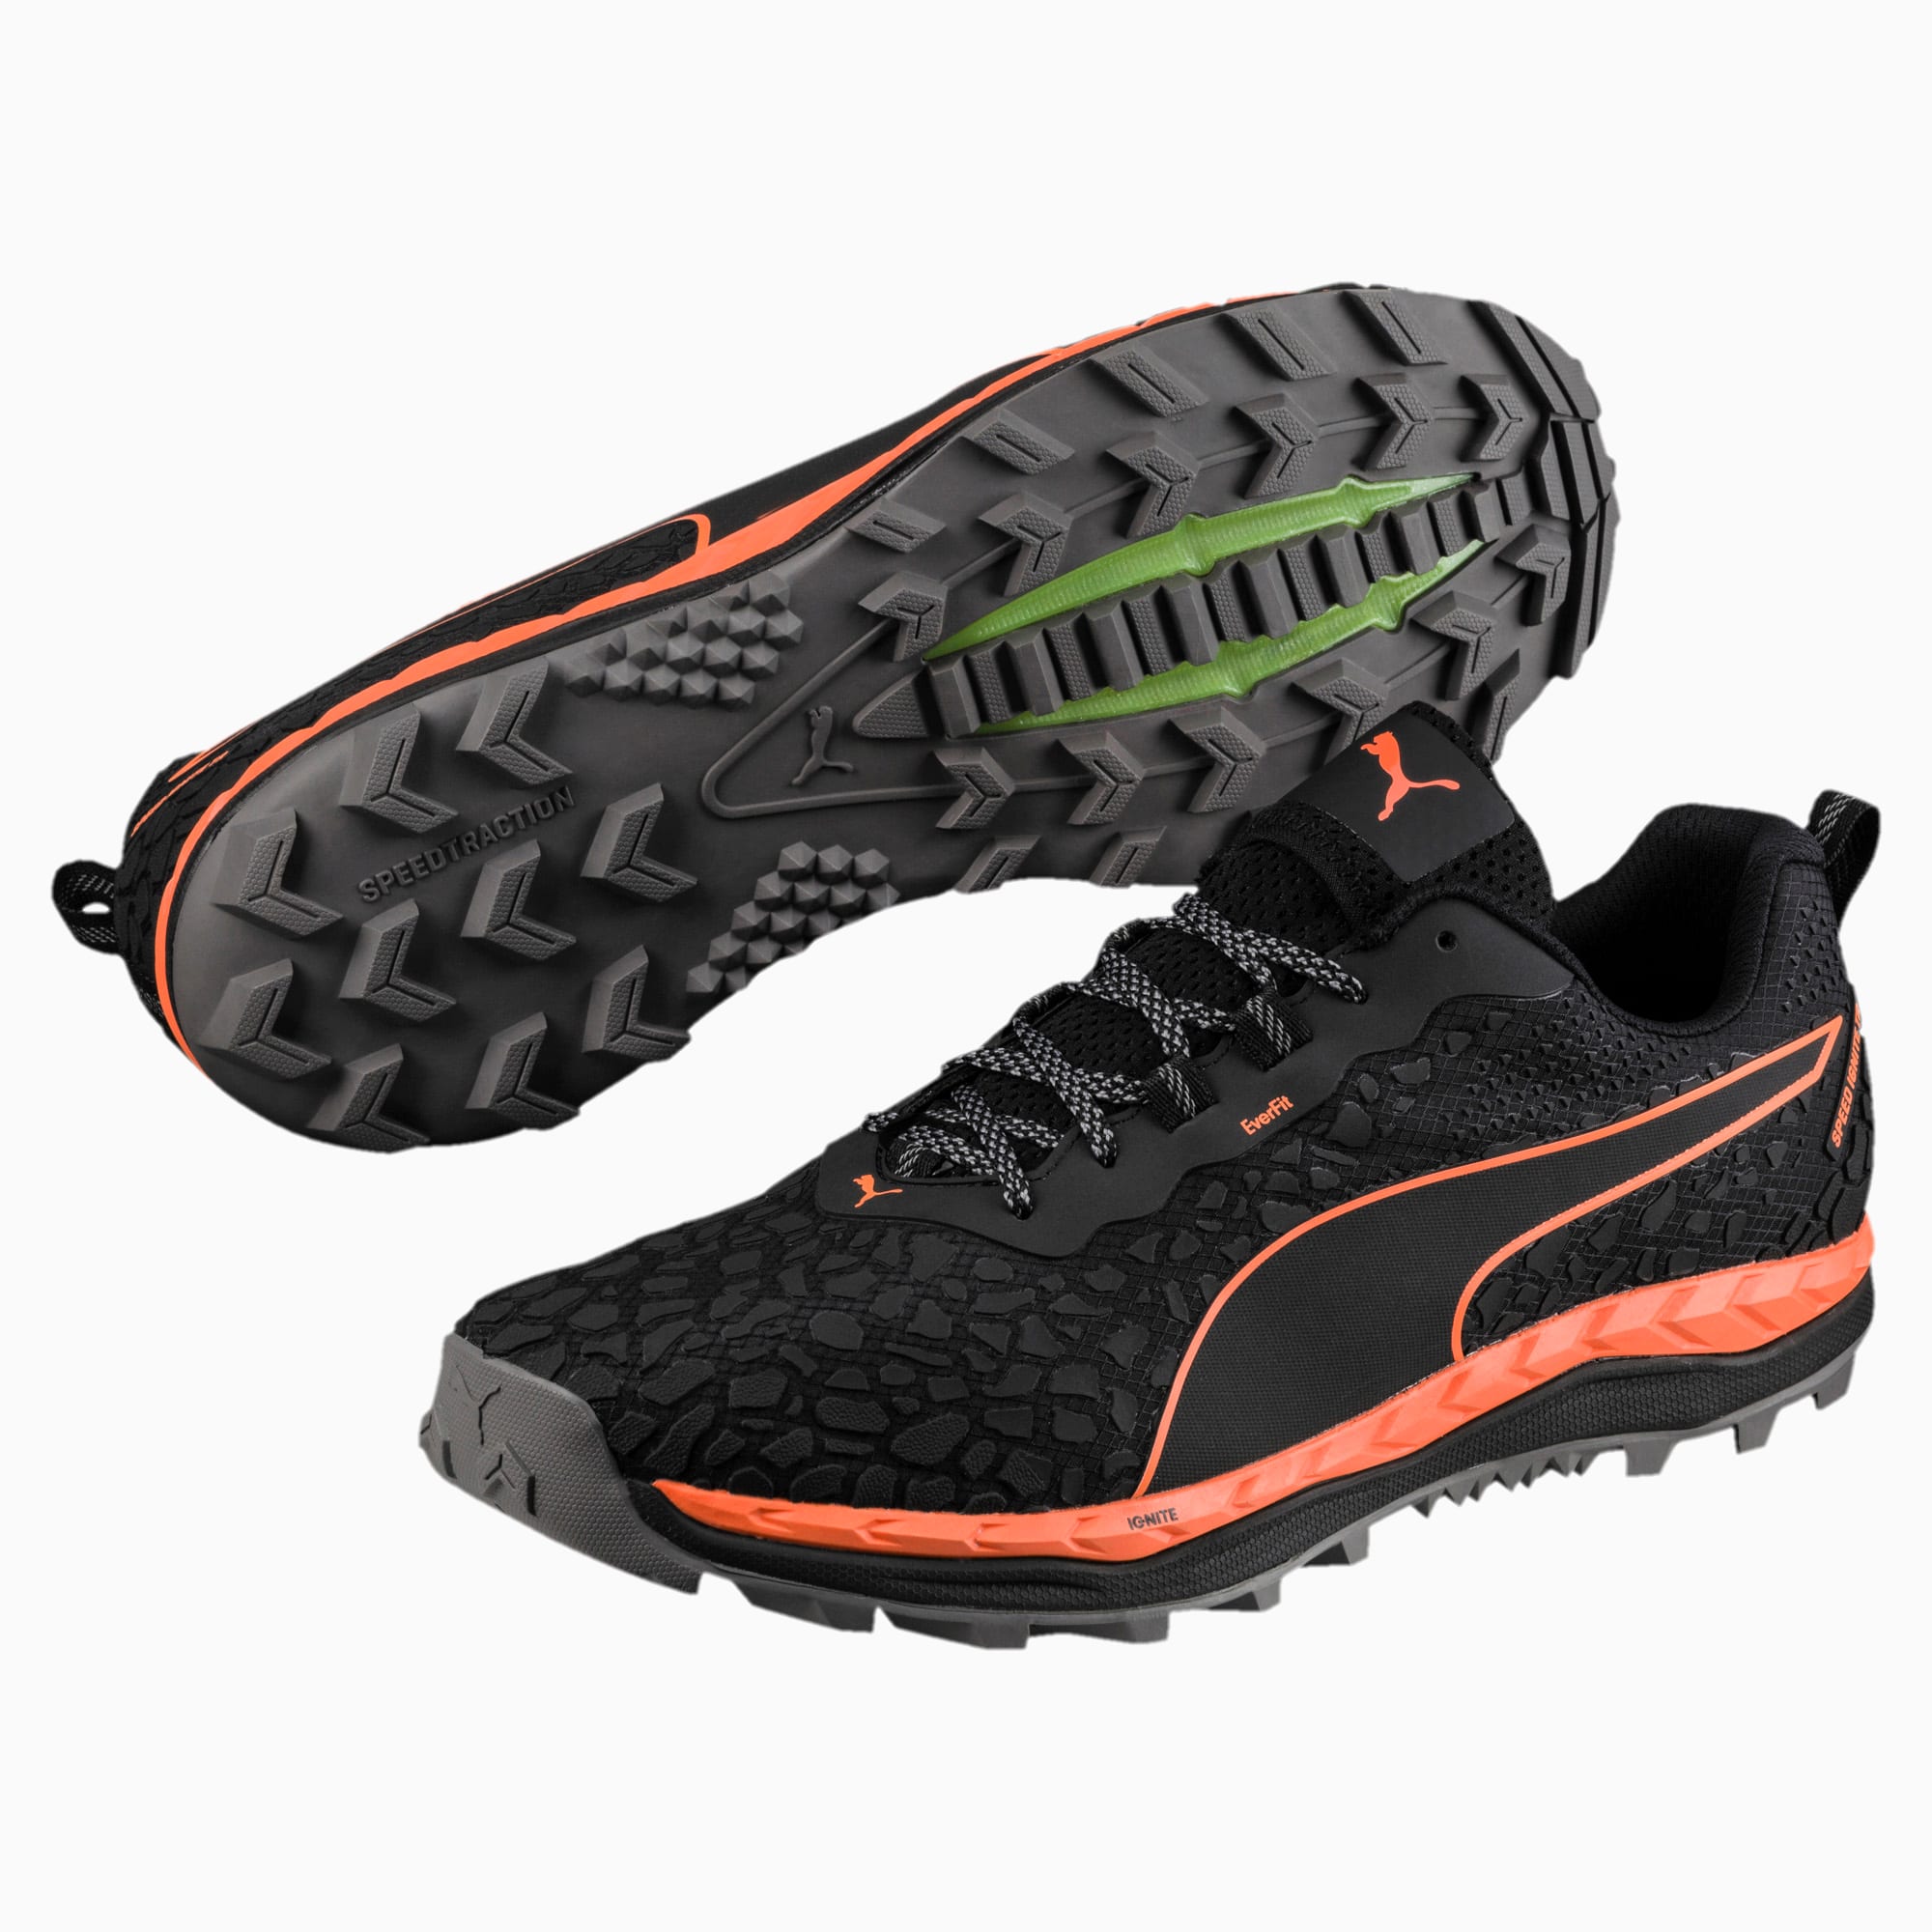 puma trail running shoes